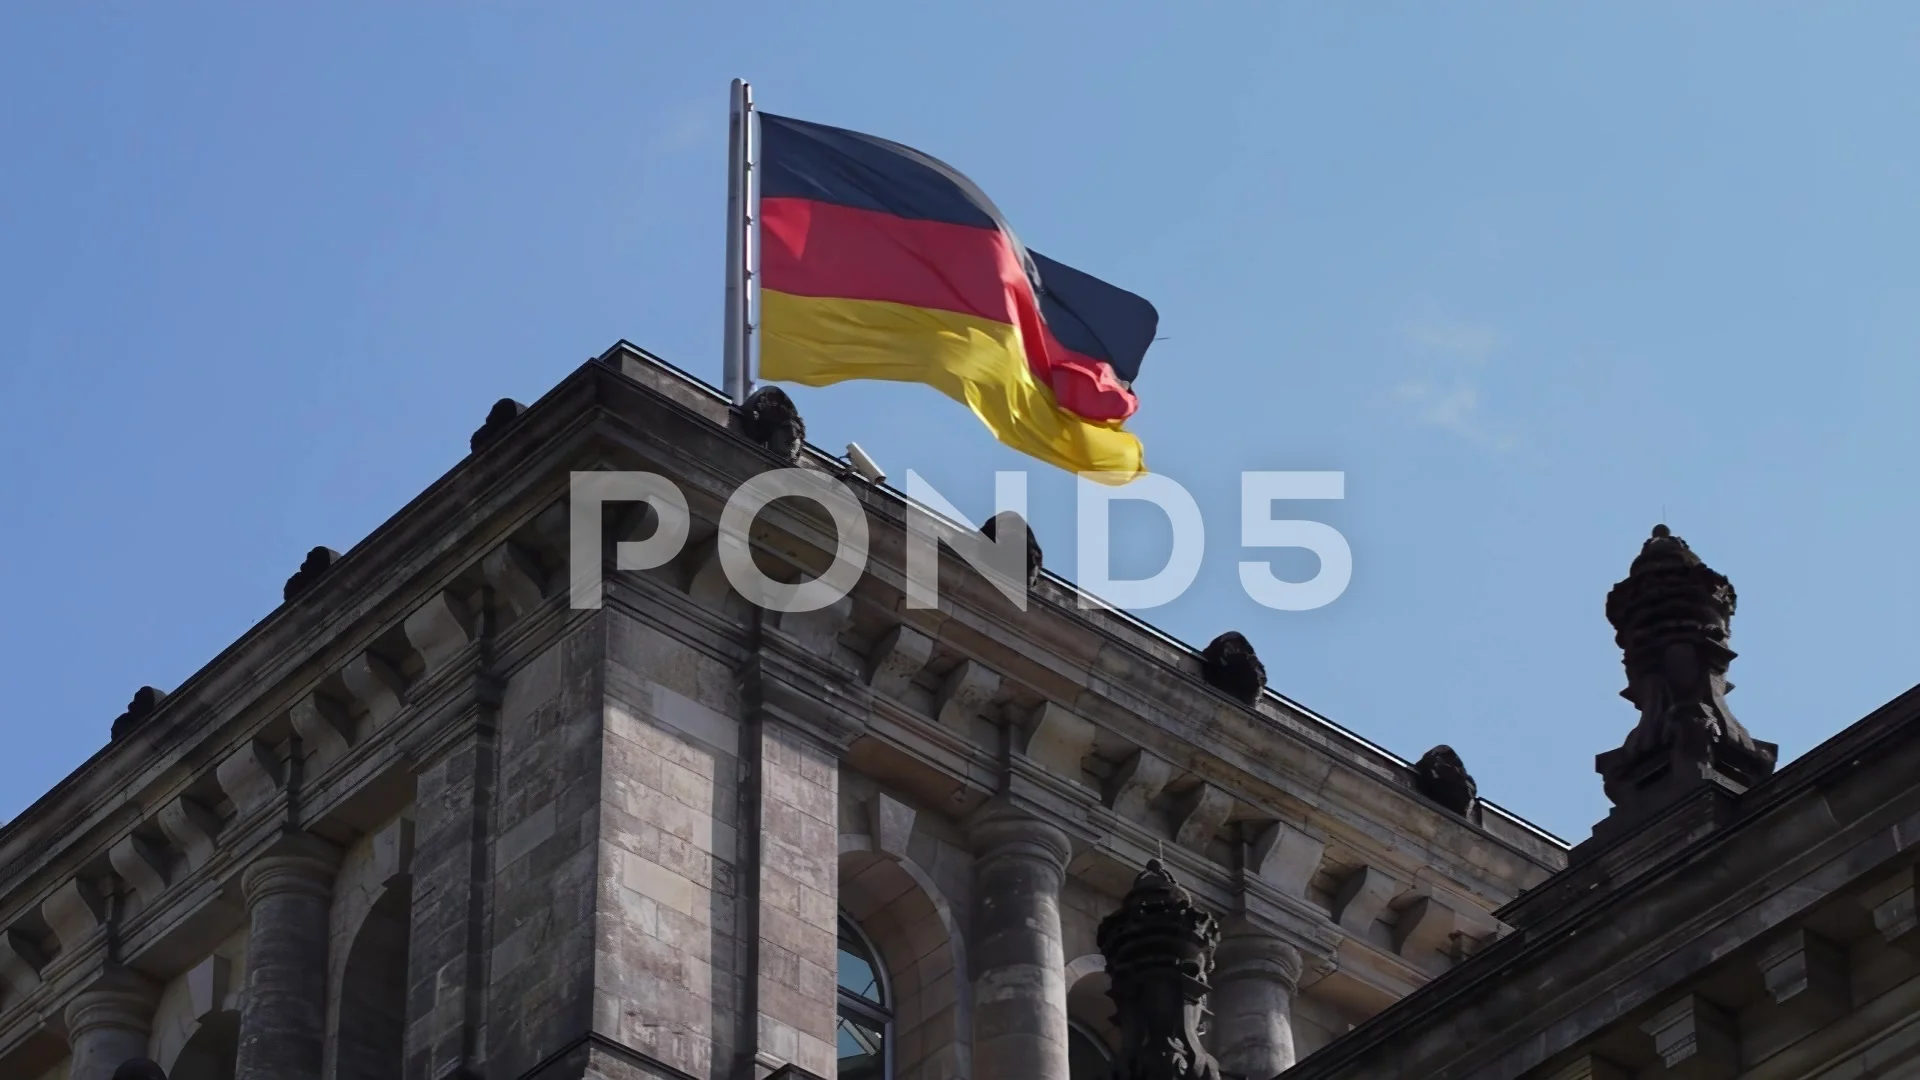 HD flag of brandenburg wallpapers